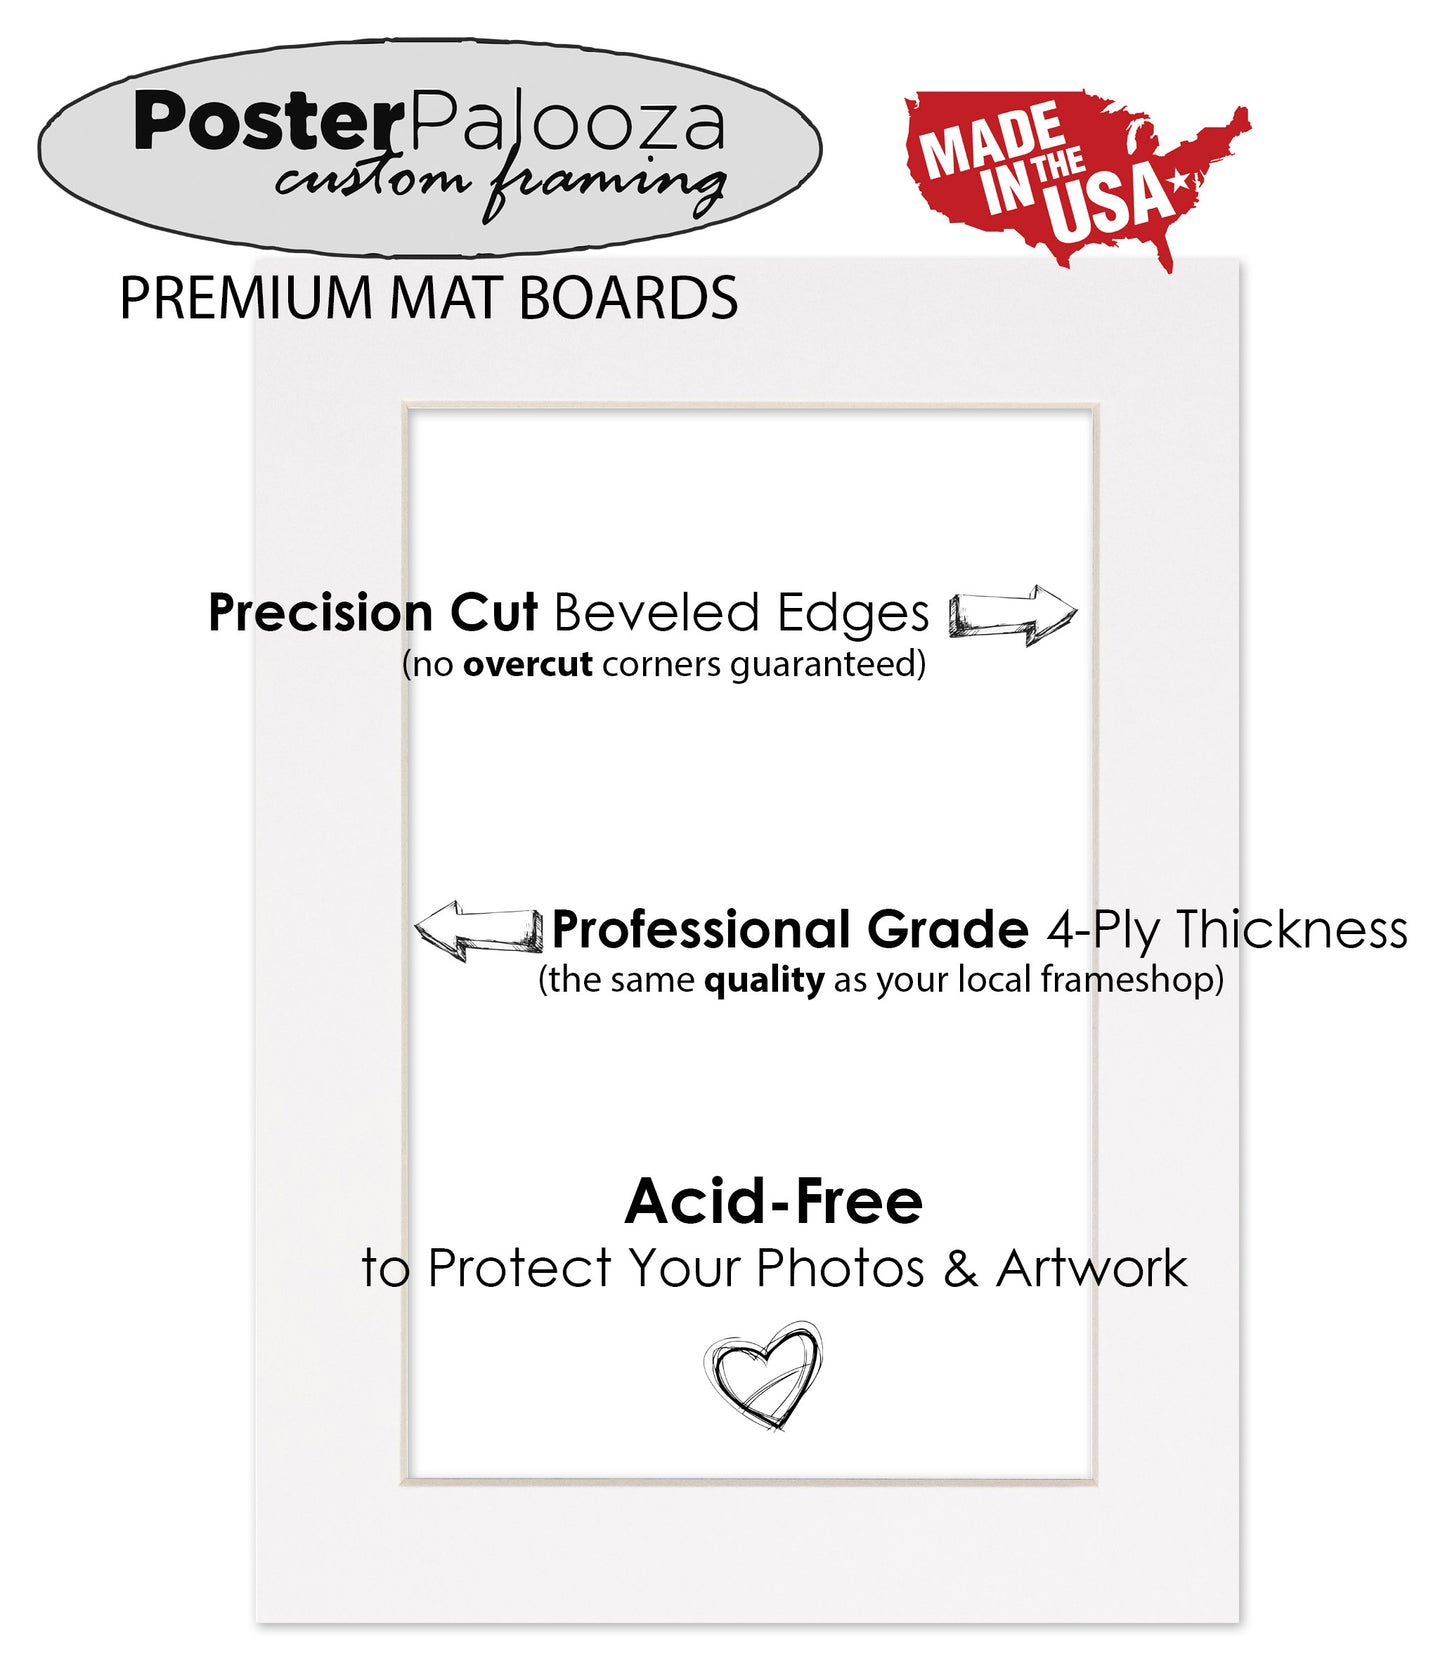 Pack of 10 Turf Green Precut Acid-Free Matboards